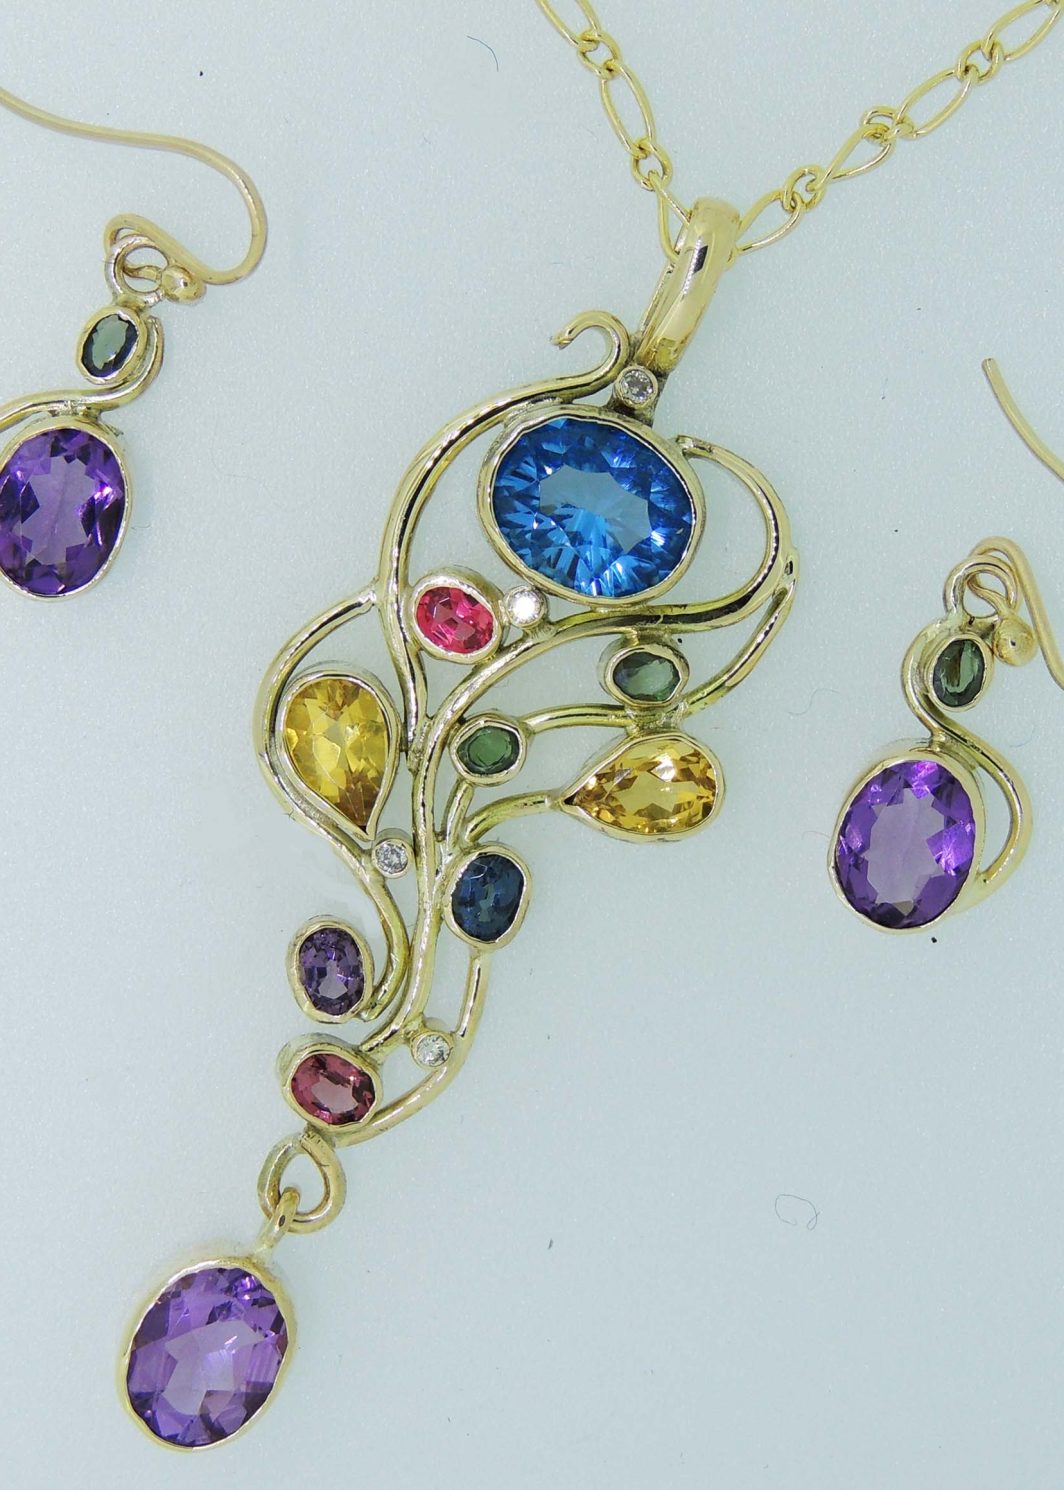 Bespoke Earrings Pendant - Joanna Thomson Jewellery, Peebles, Scotland